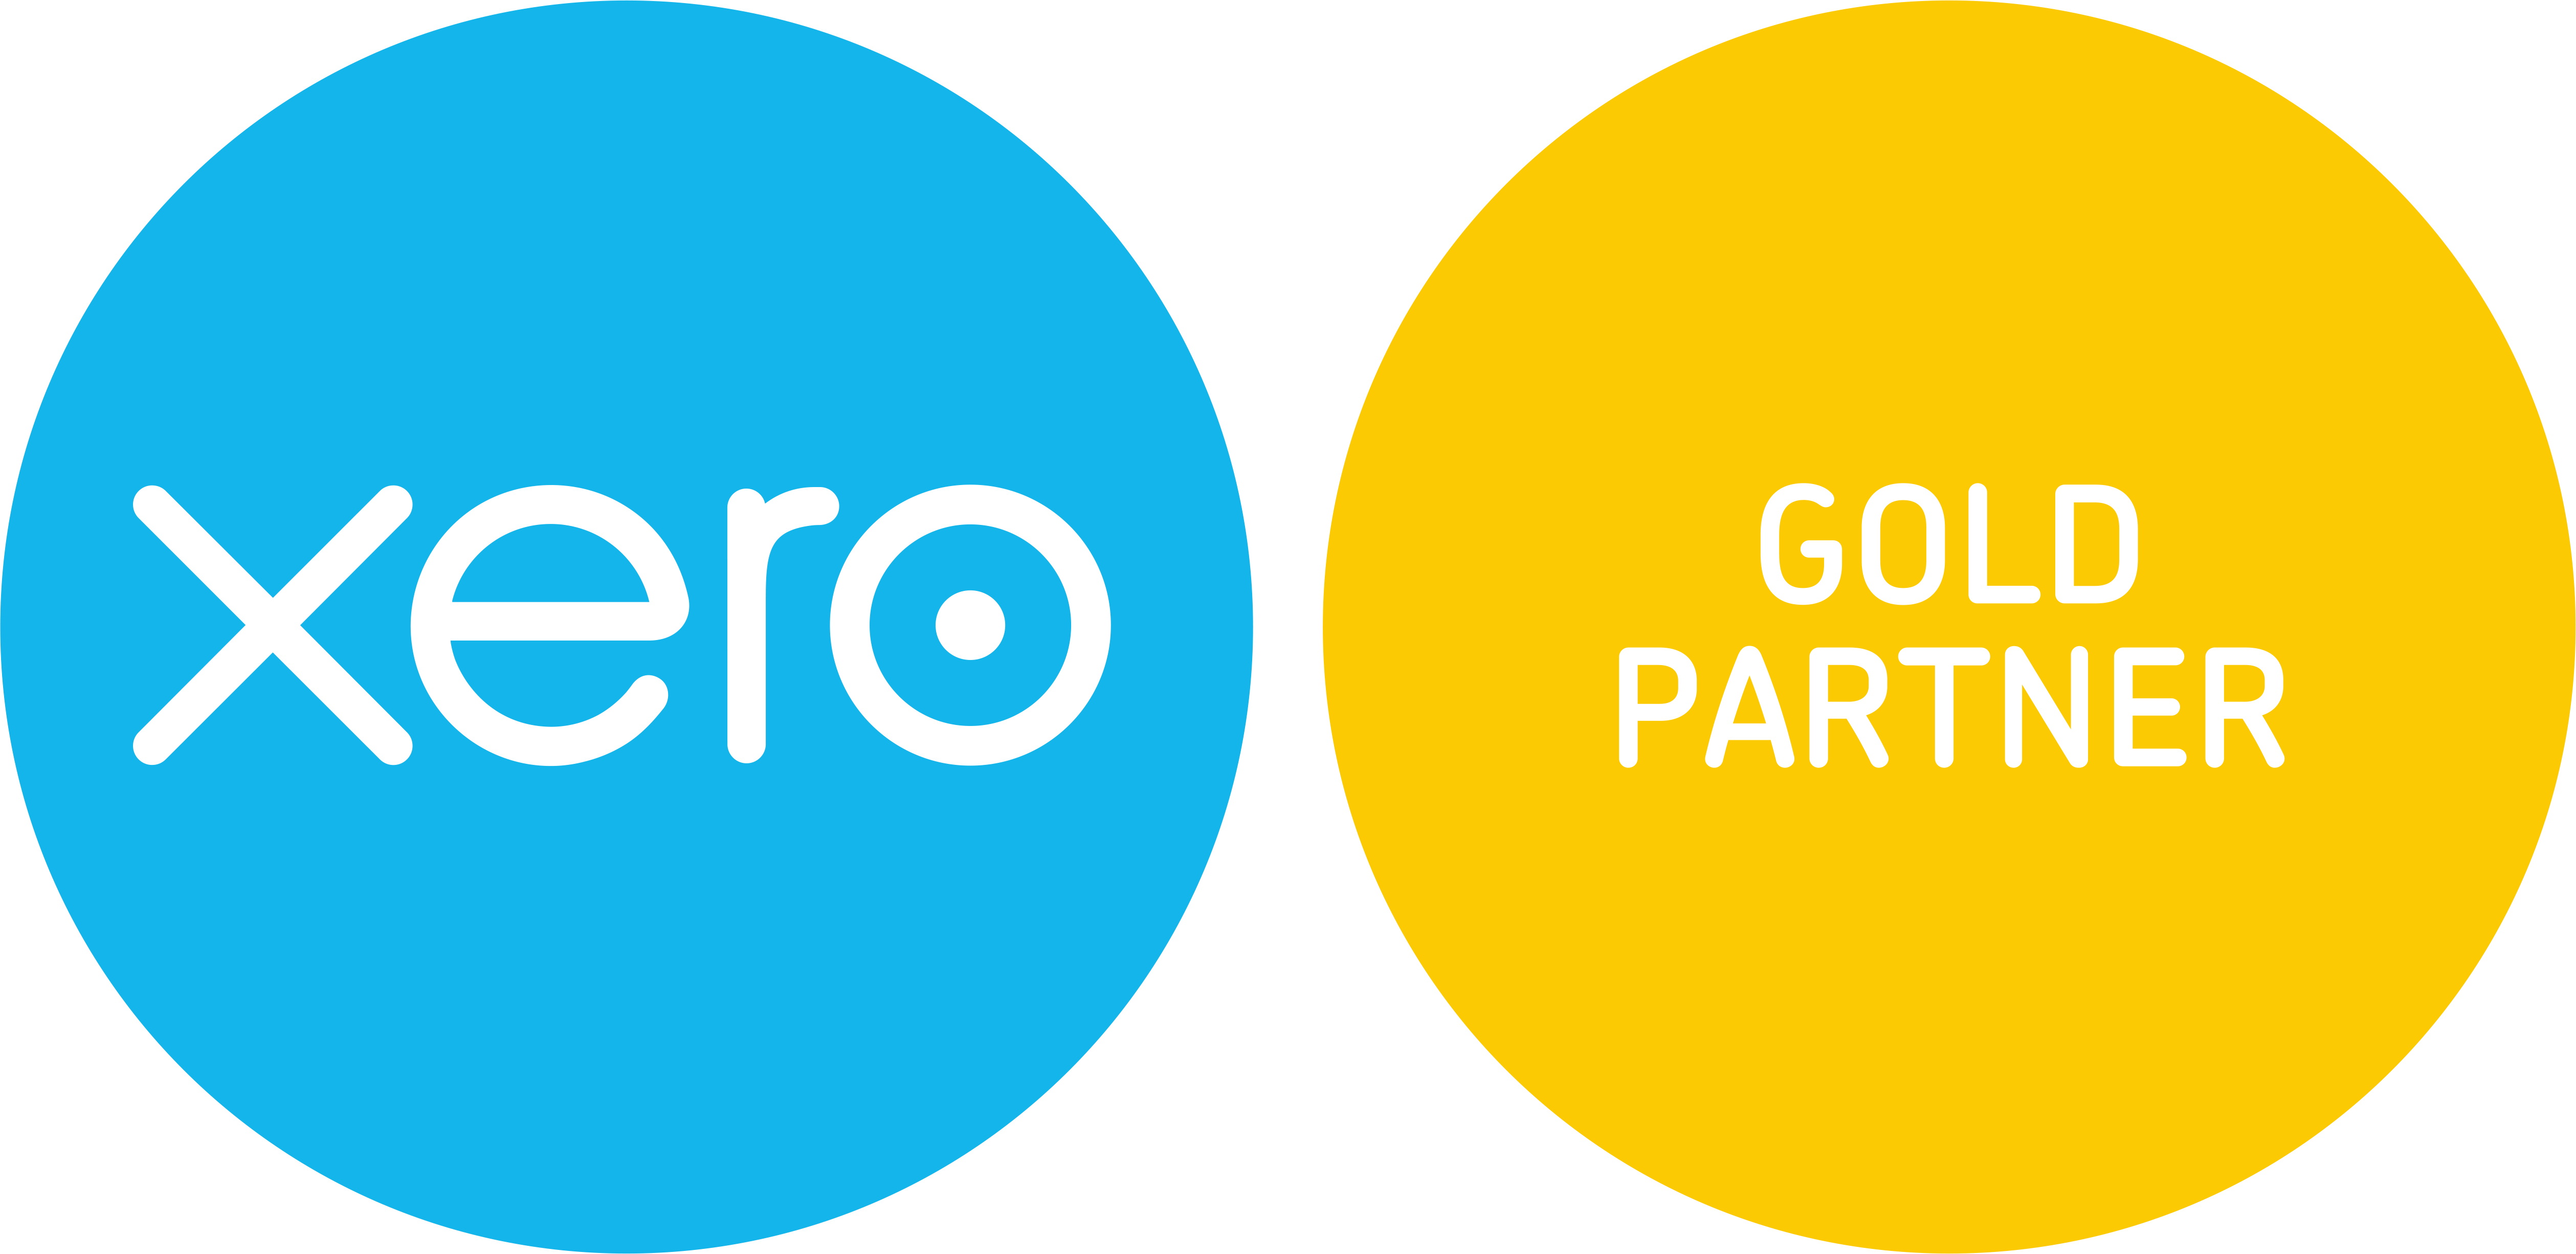 Xero Gold Partner Badge